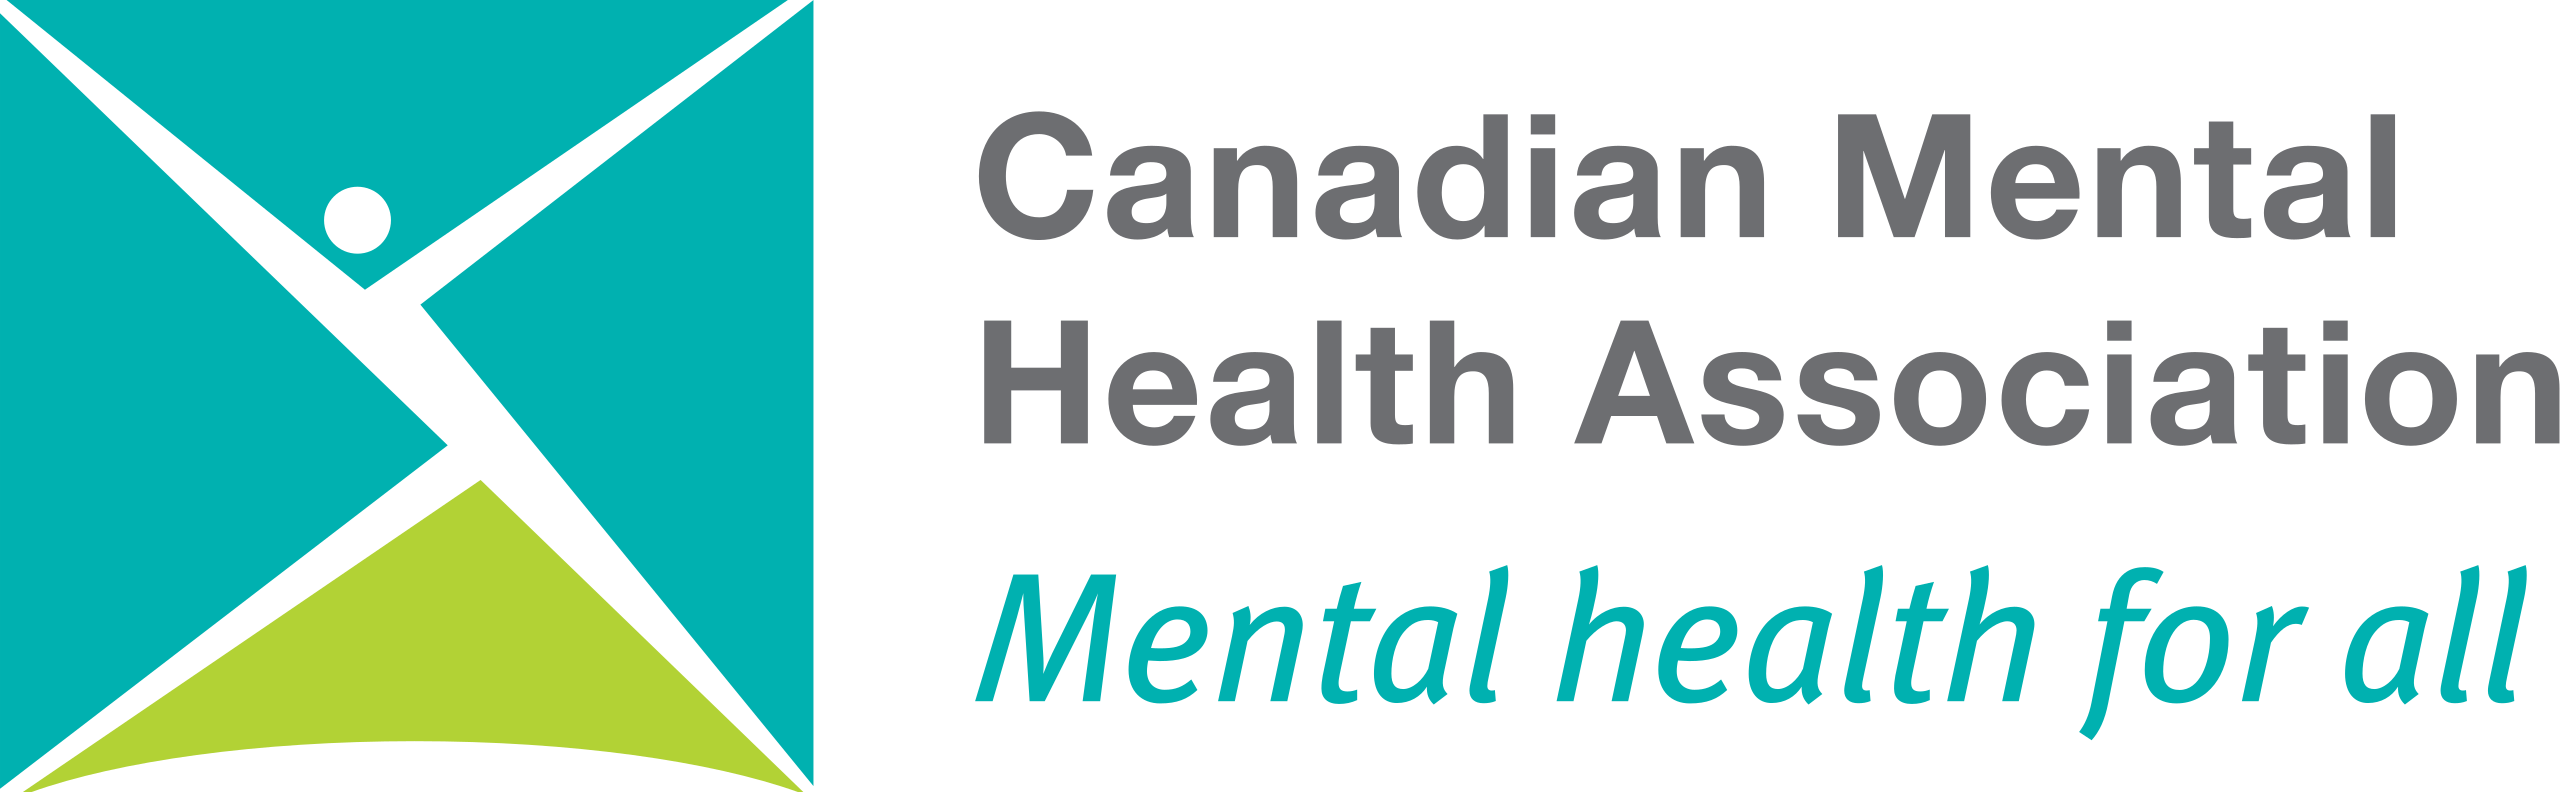 Canadian_Mental_Health_Association_logo.svg